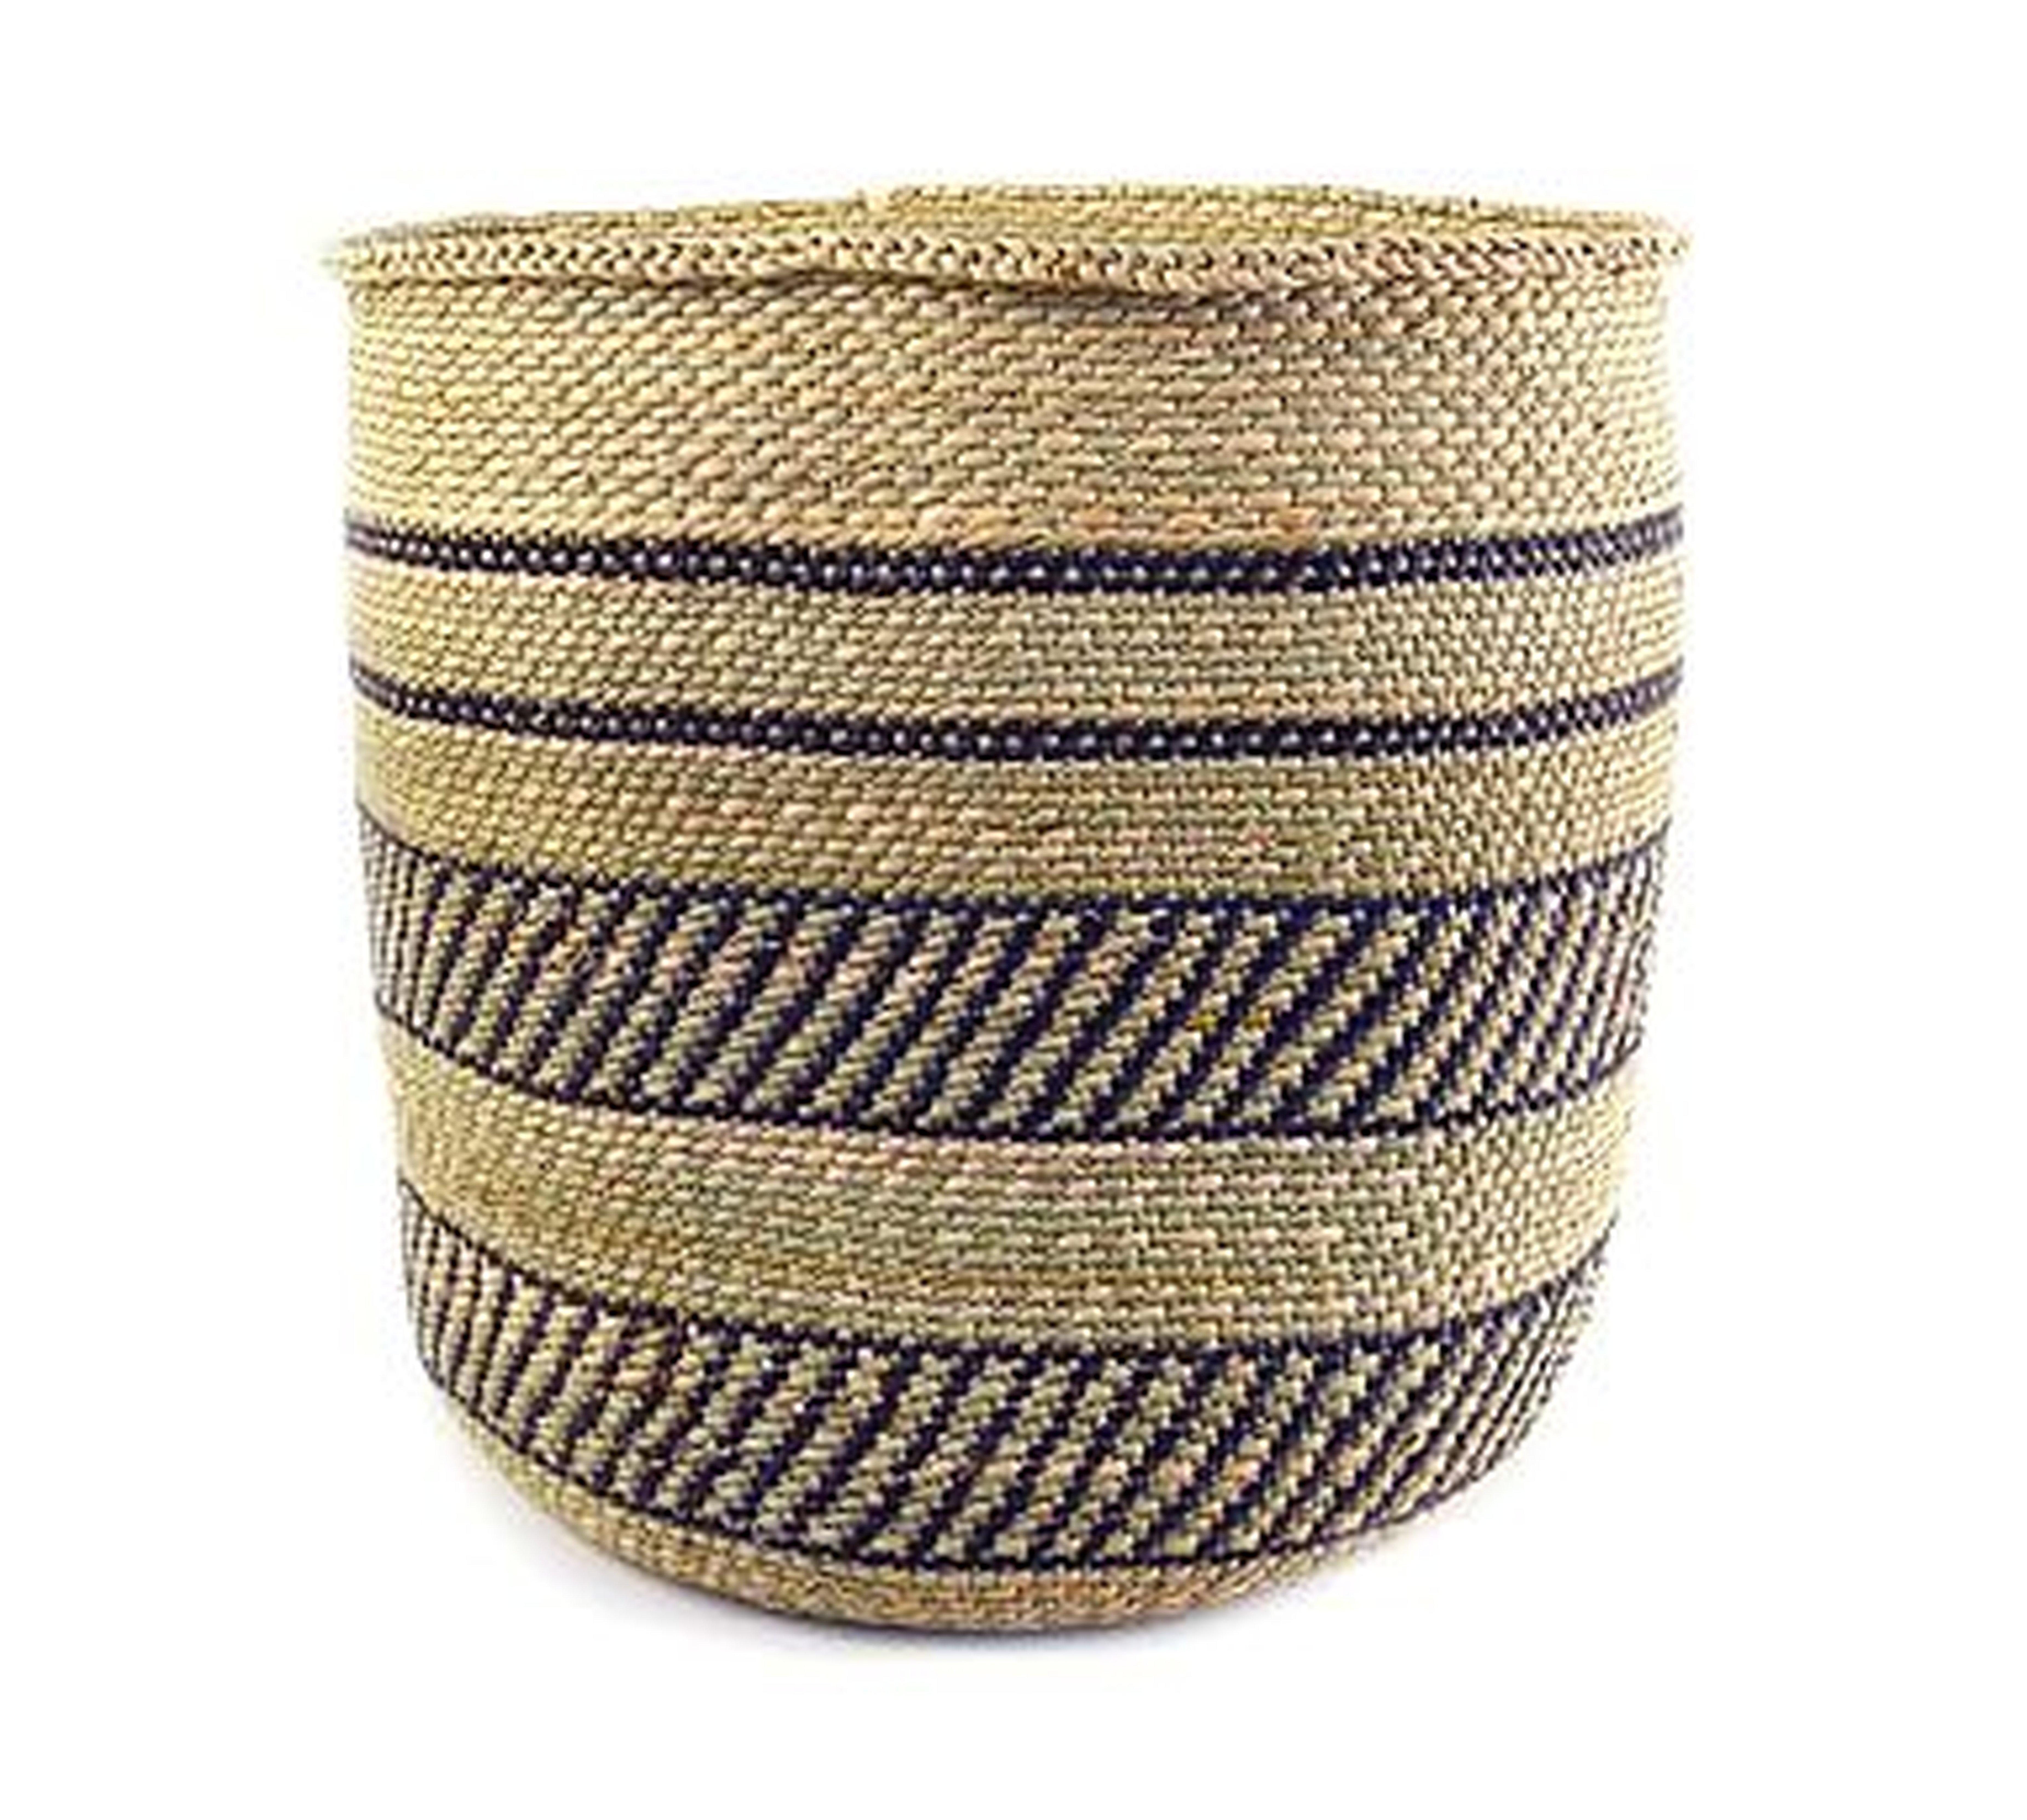 Iringa Woven Basket, Black Stripe - Large - Pottery Barn